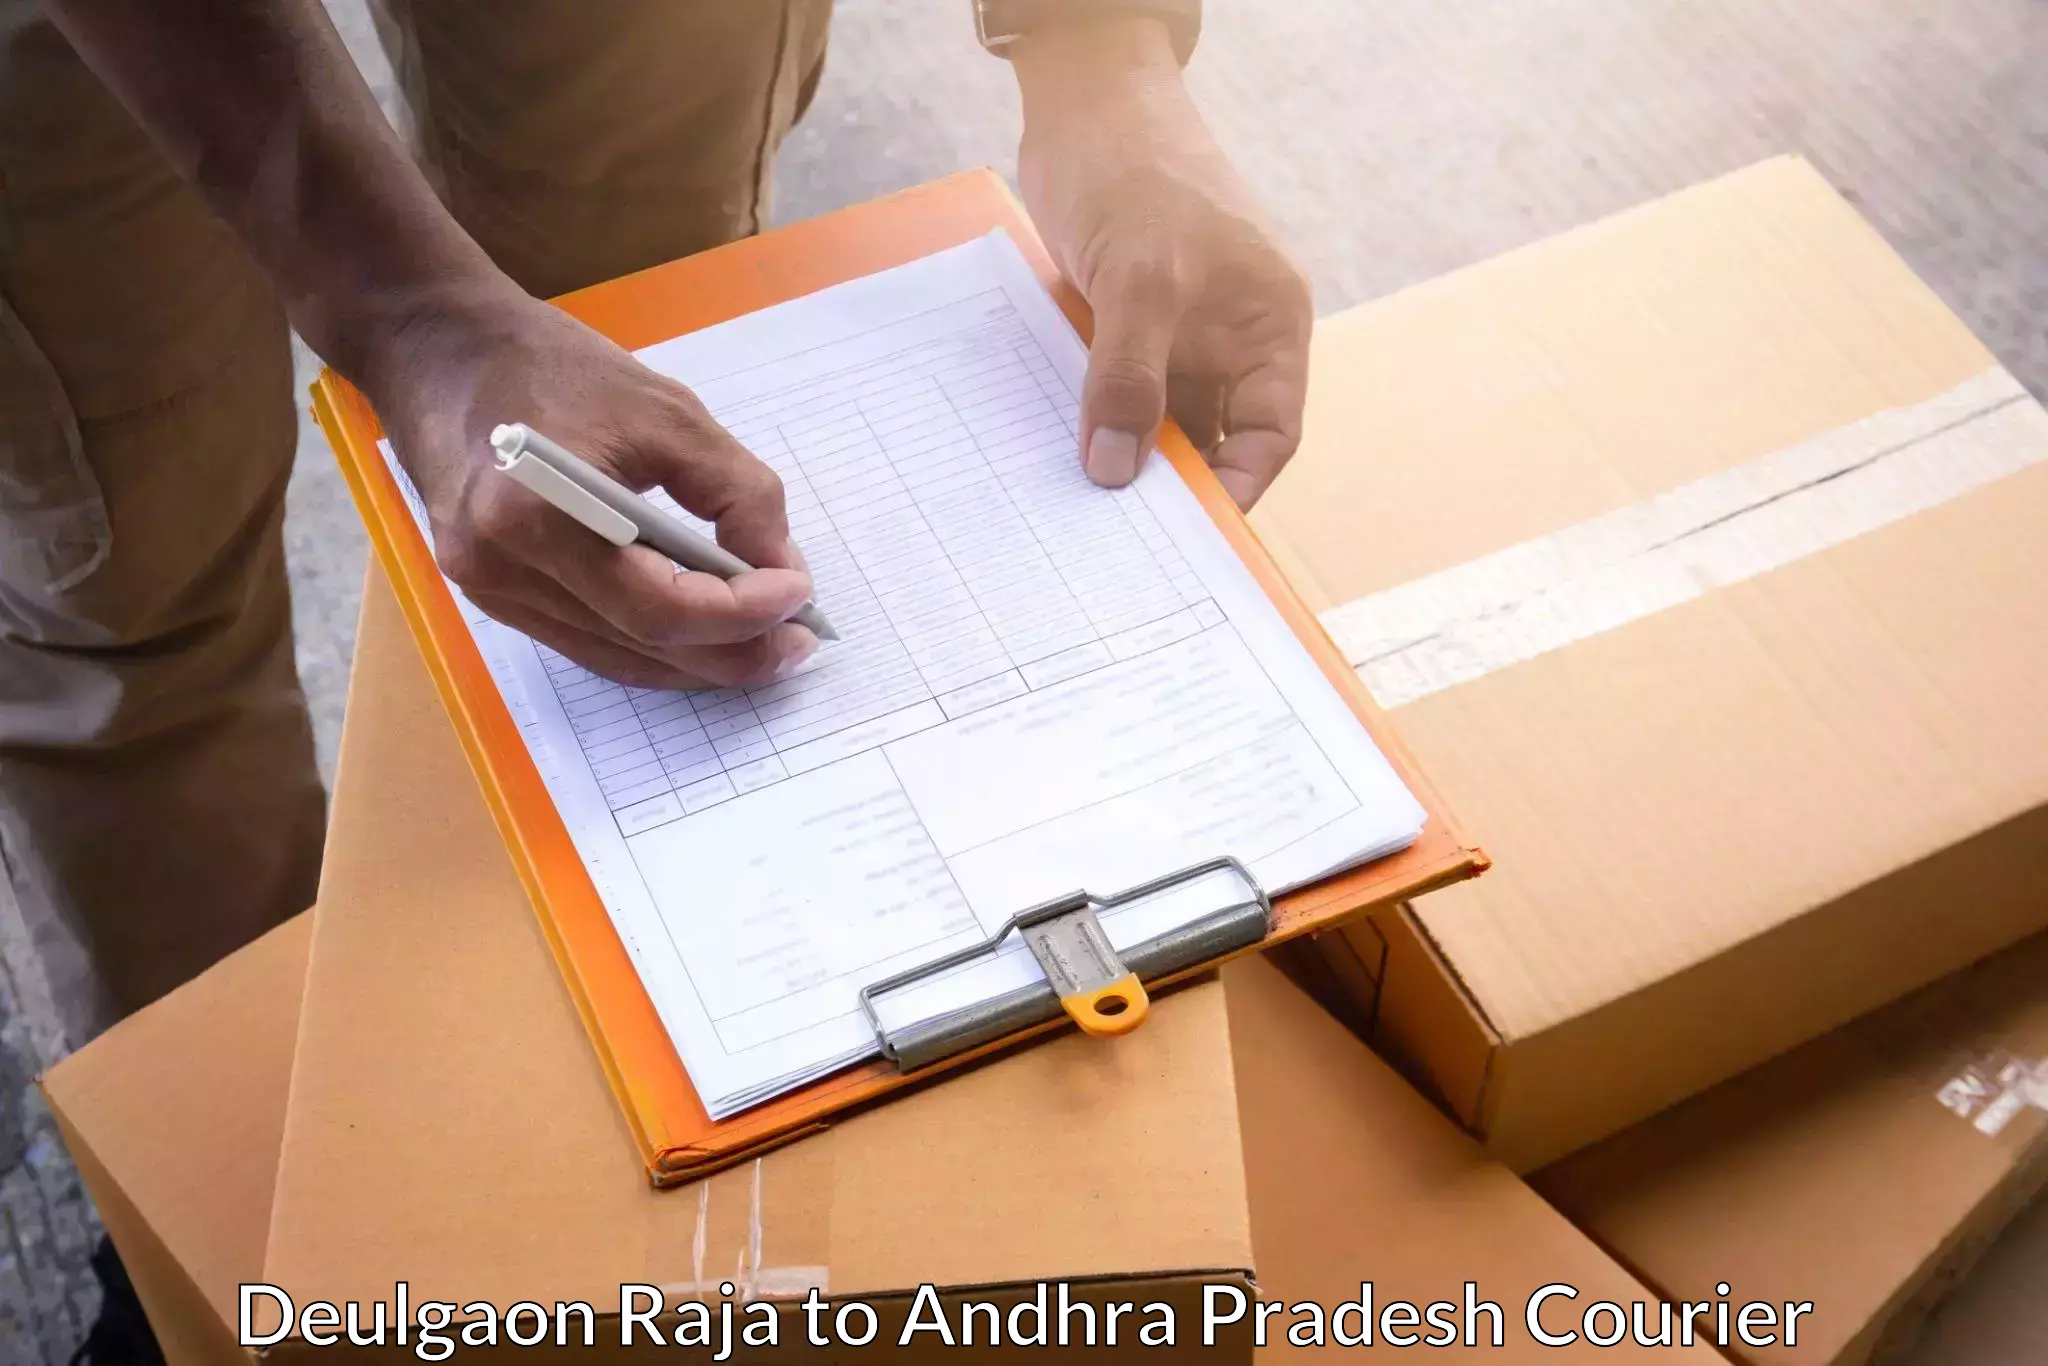 Courier service partnerships in Deulgaon Raja to Andhra Pradesh